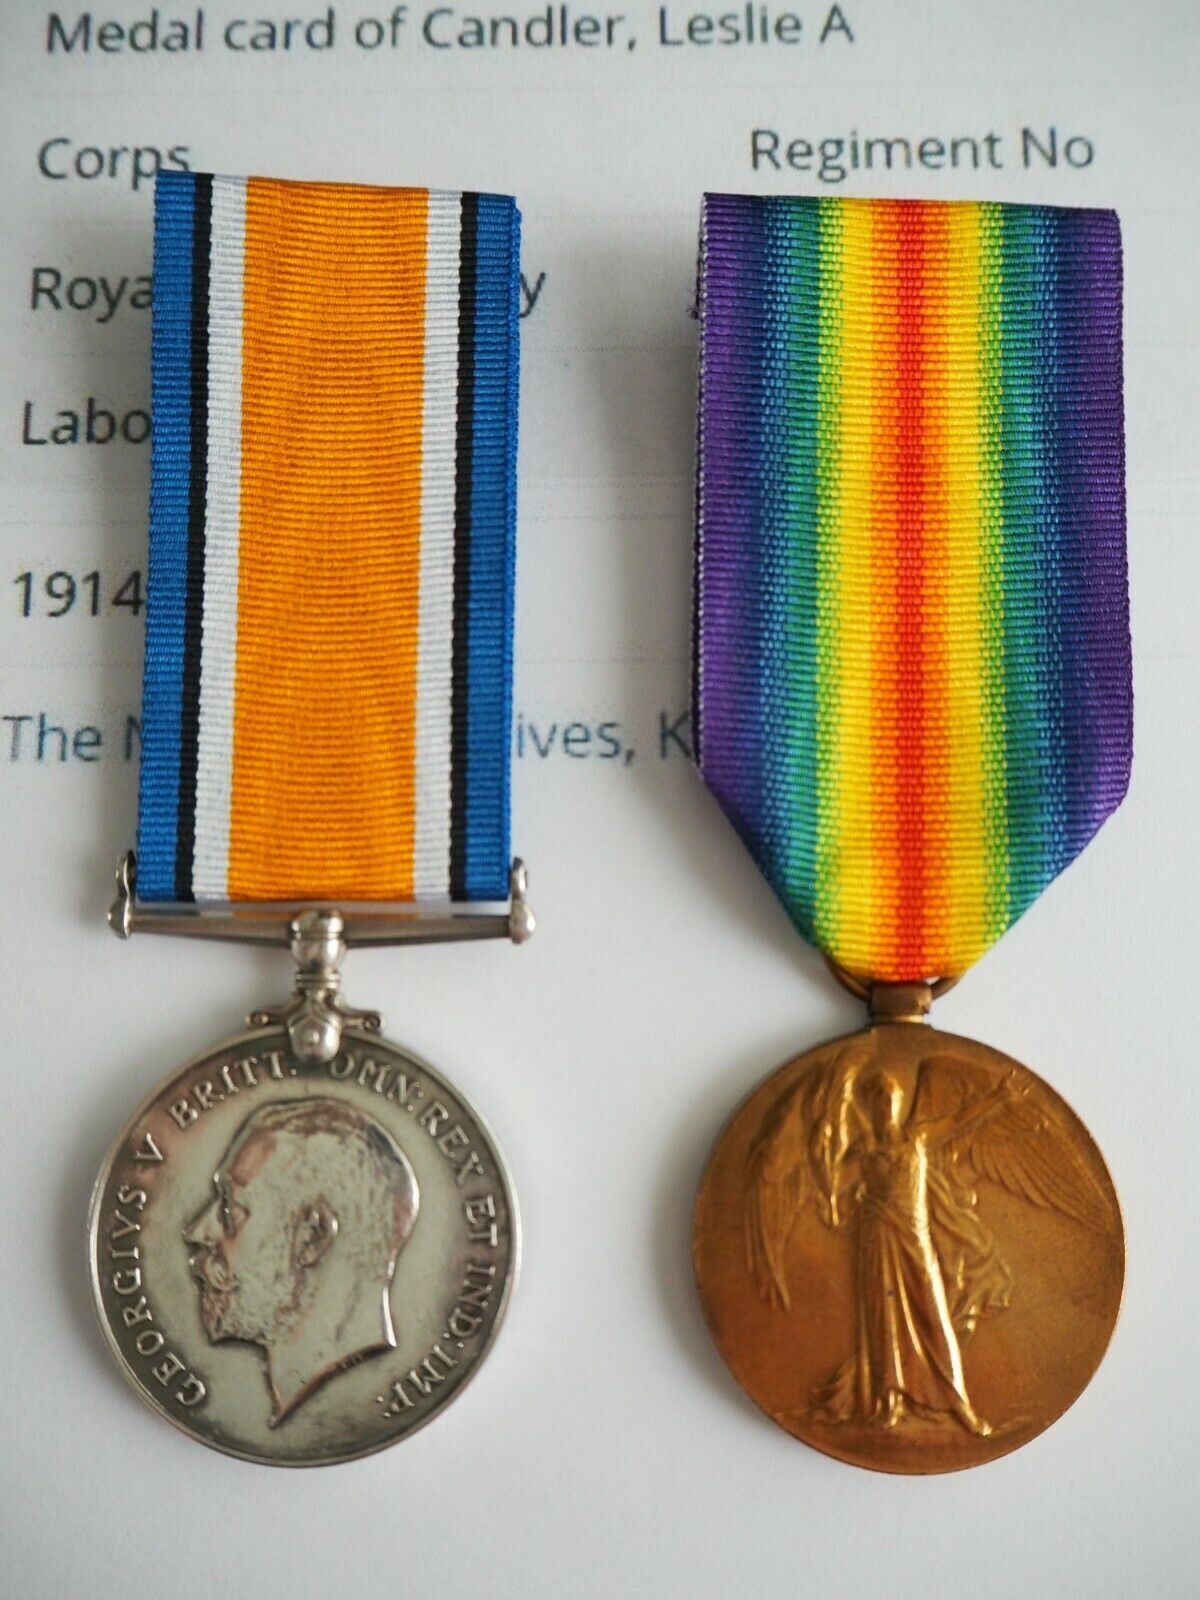 WW1 Medal Pair - 37068 DVR. L. A. CANDLER. R. A.